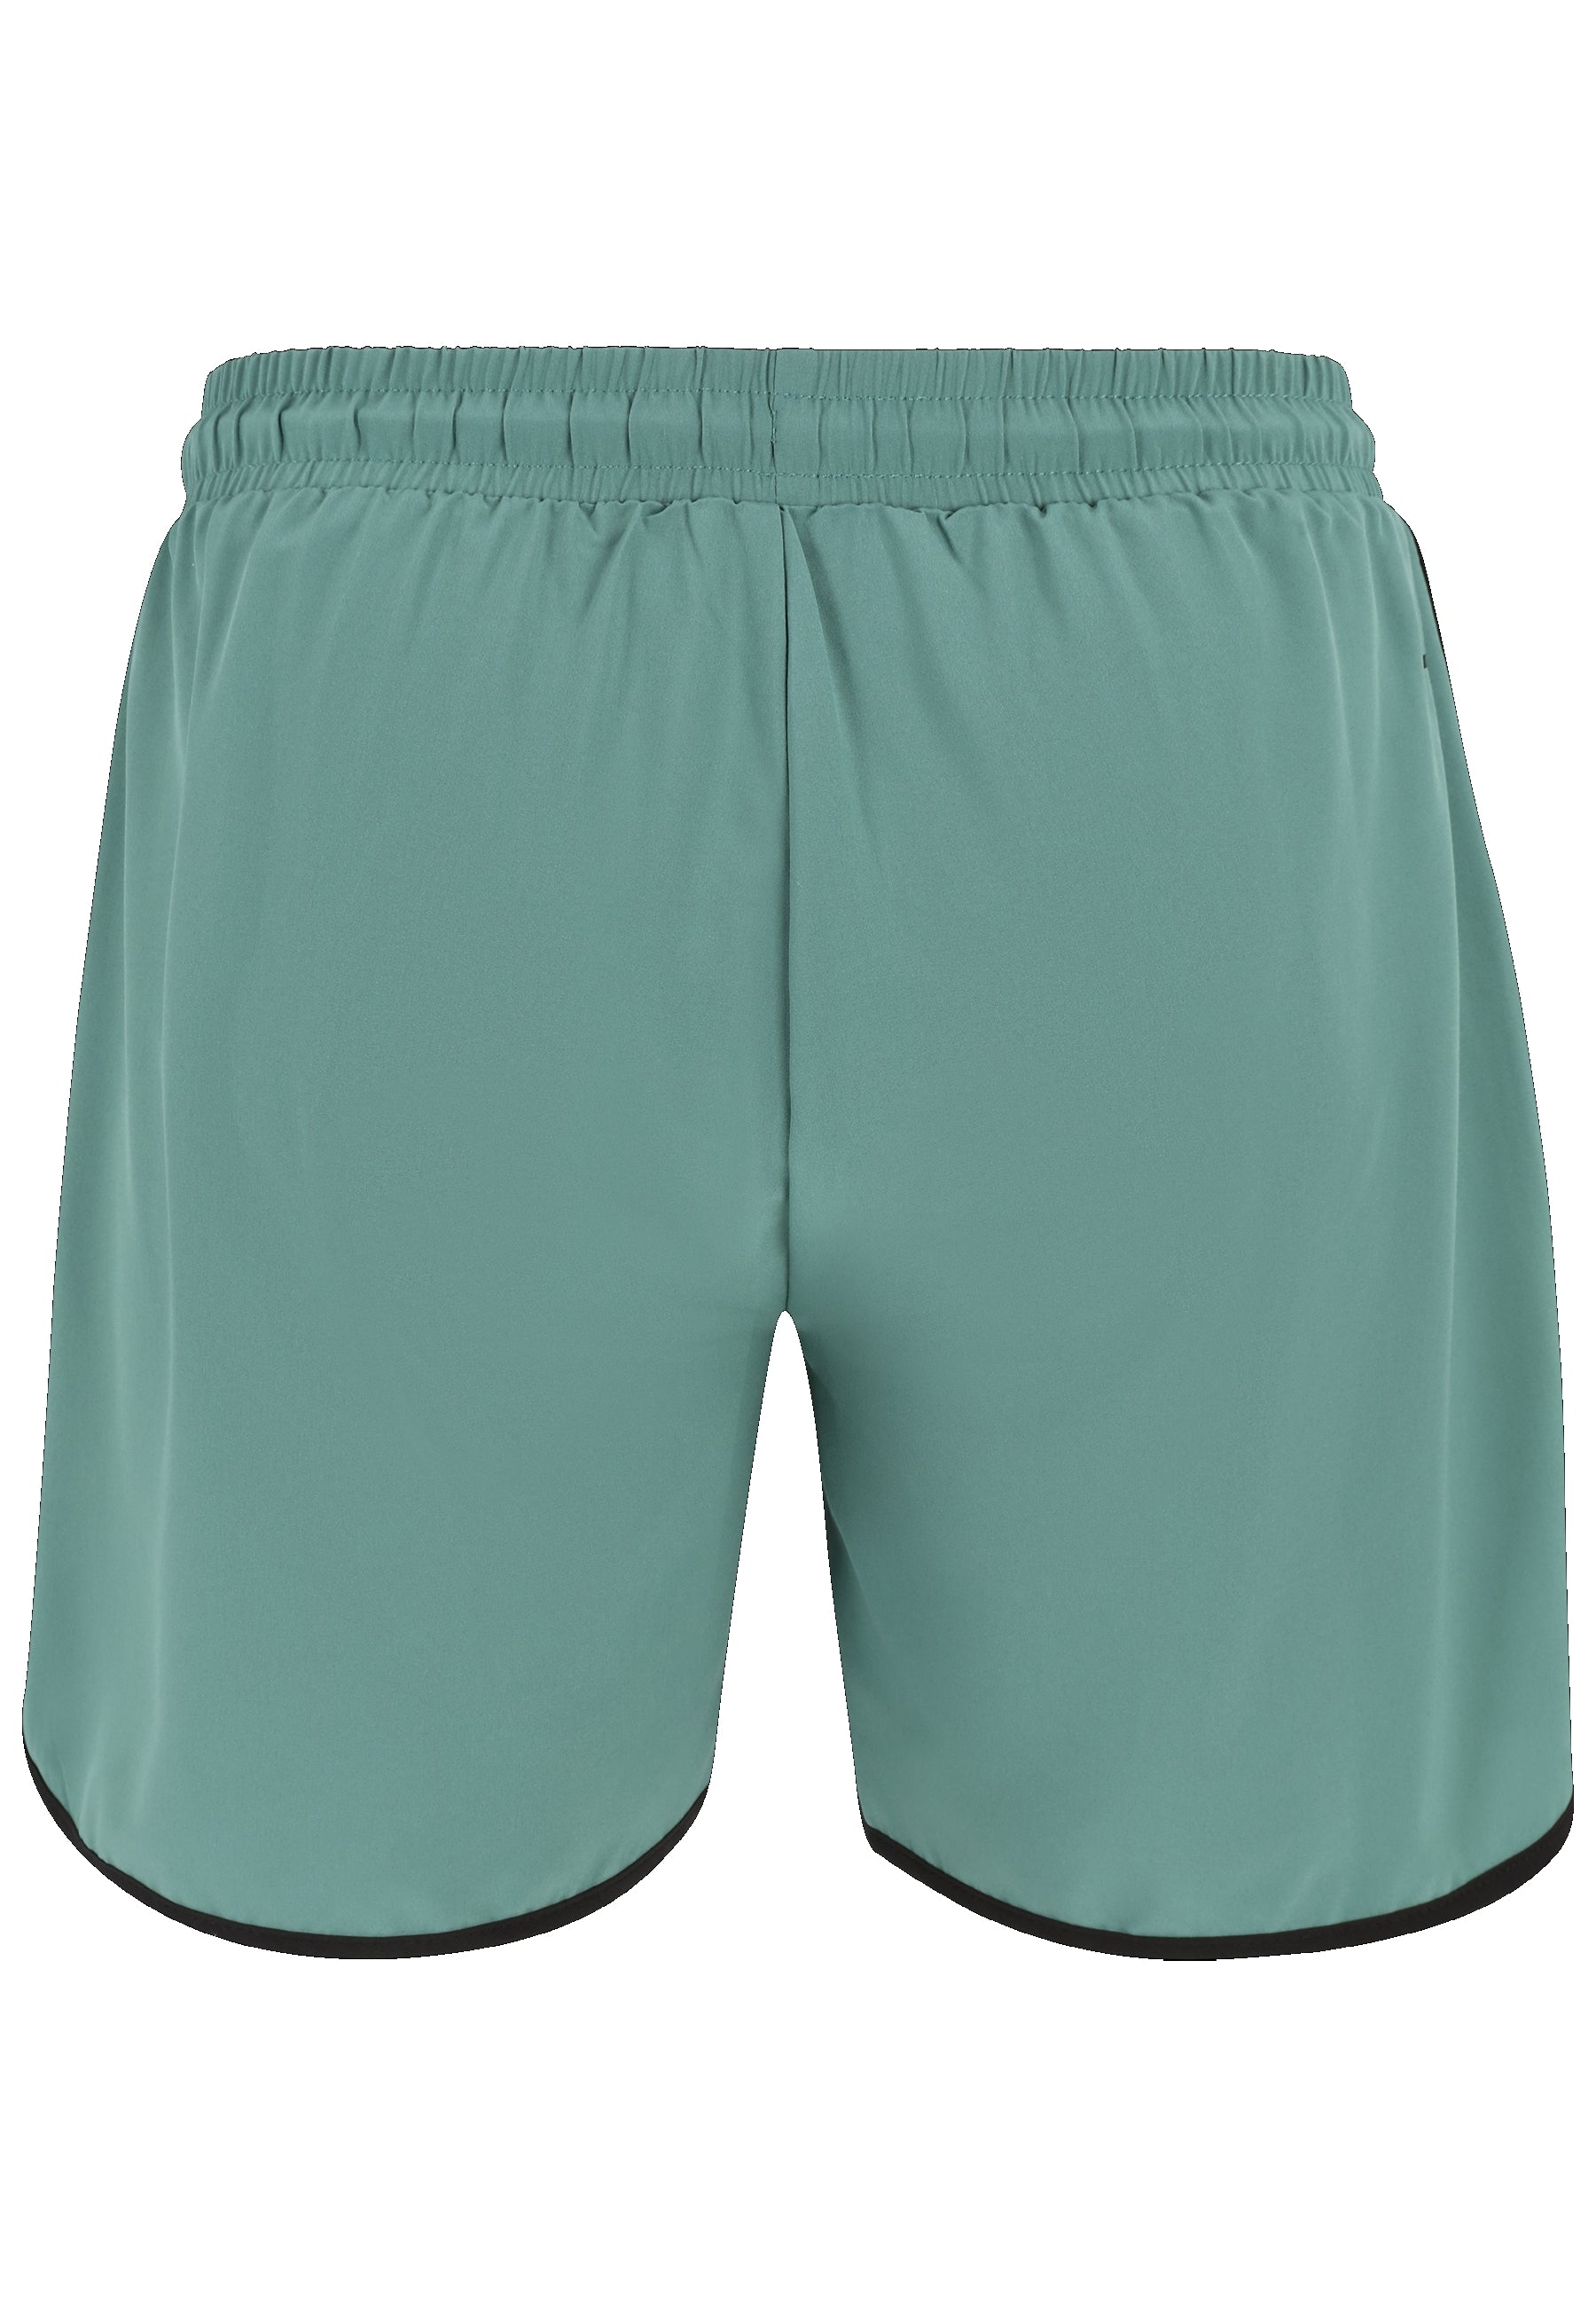 Scilla Beach Shorts in Blue Spruce Badehosen Fila   